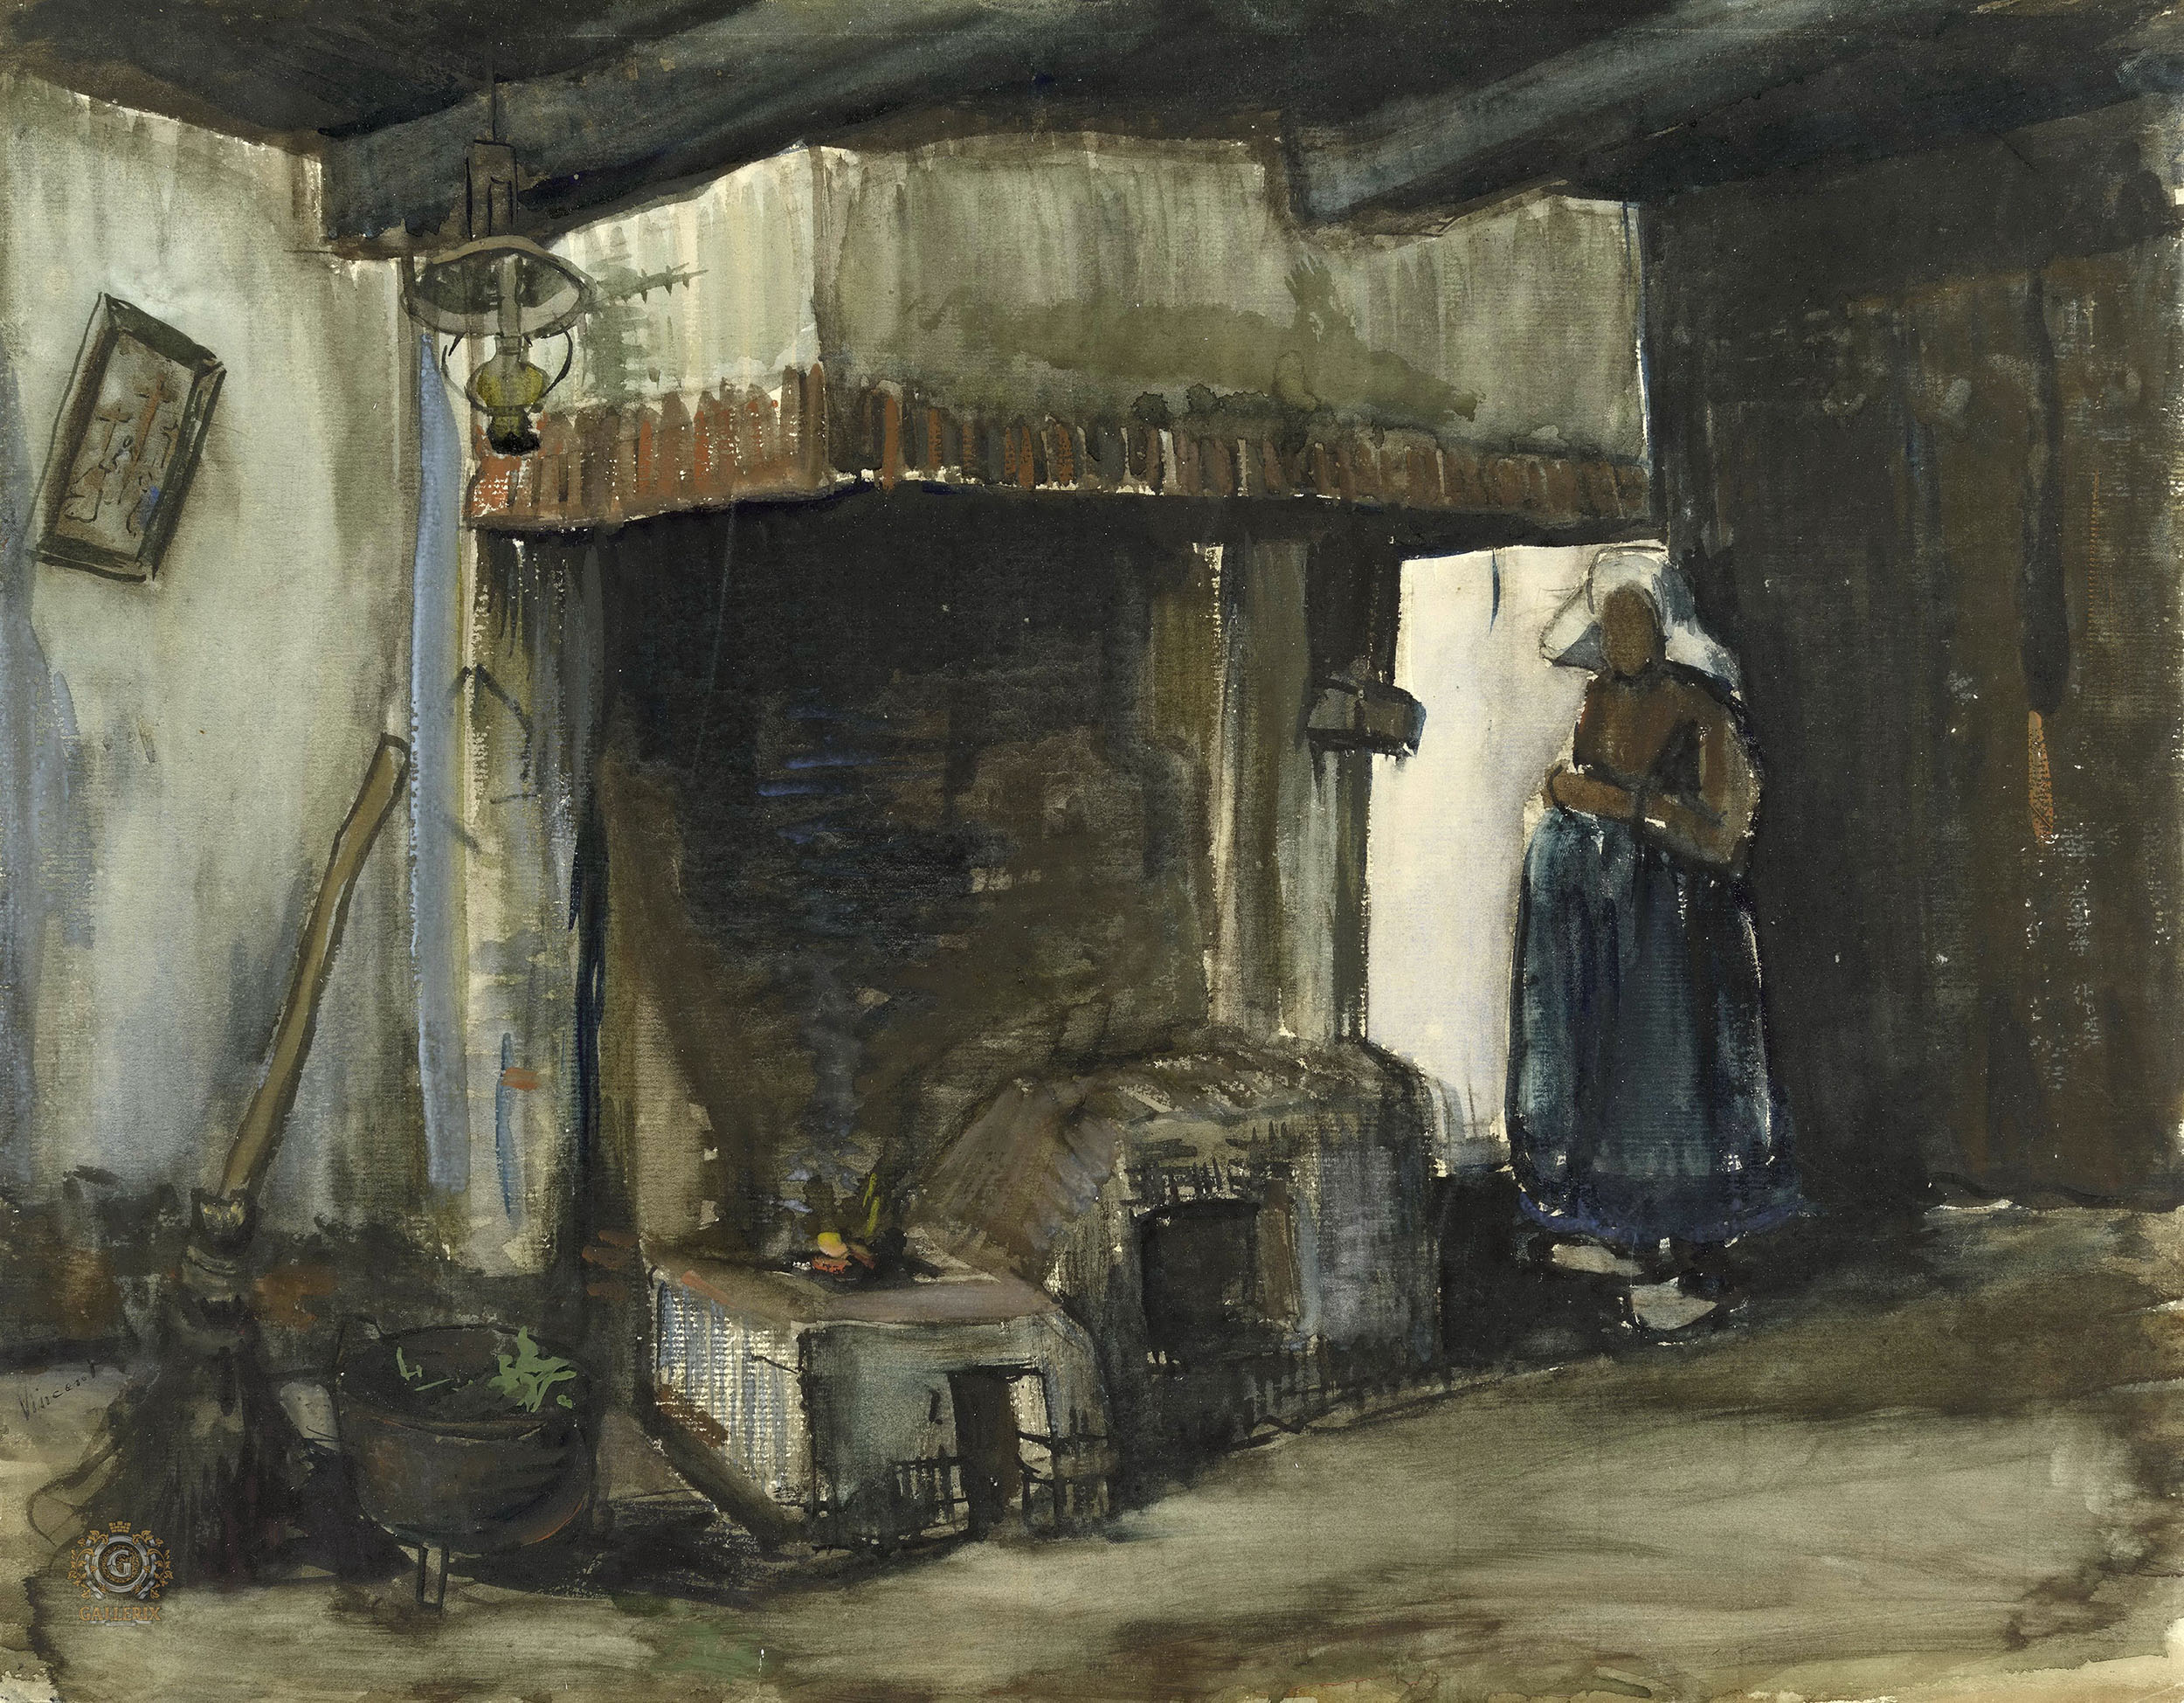 Винсент Ван Гог. "Женщина у камина". 1885. Музей Ван Гога, Амстердам.